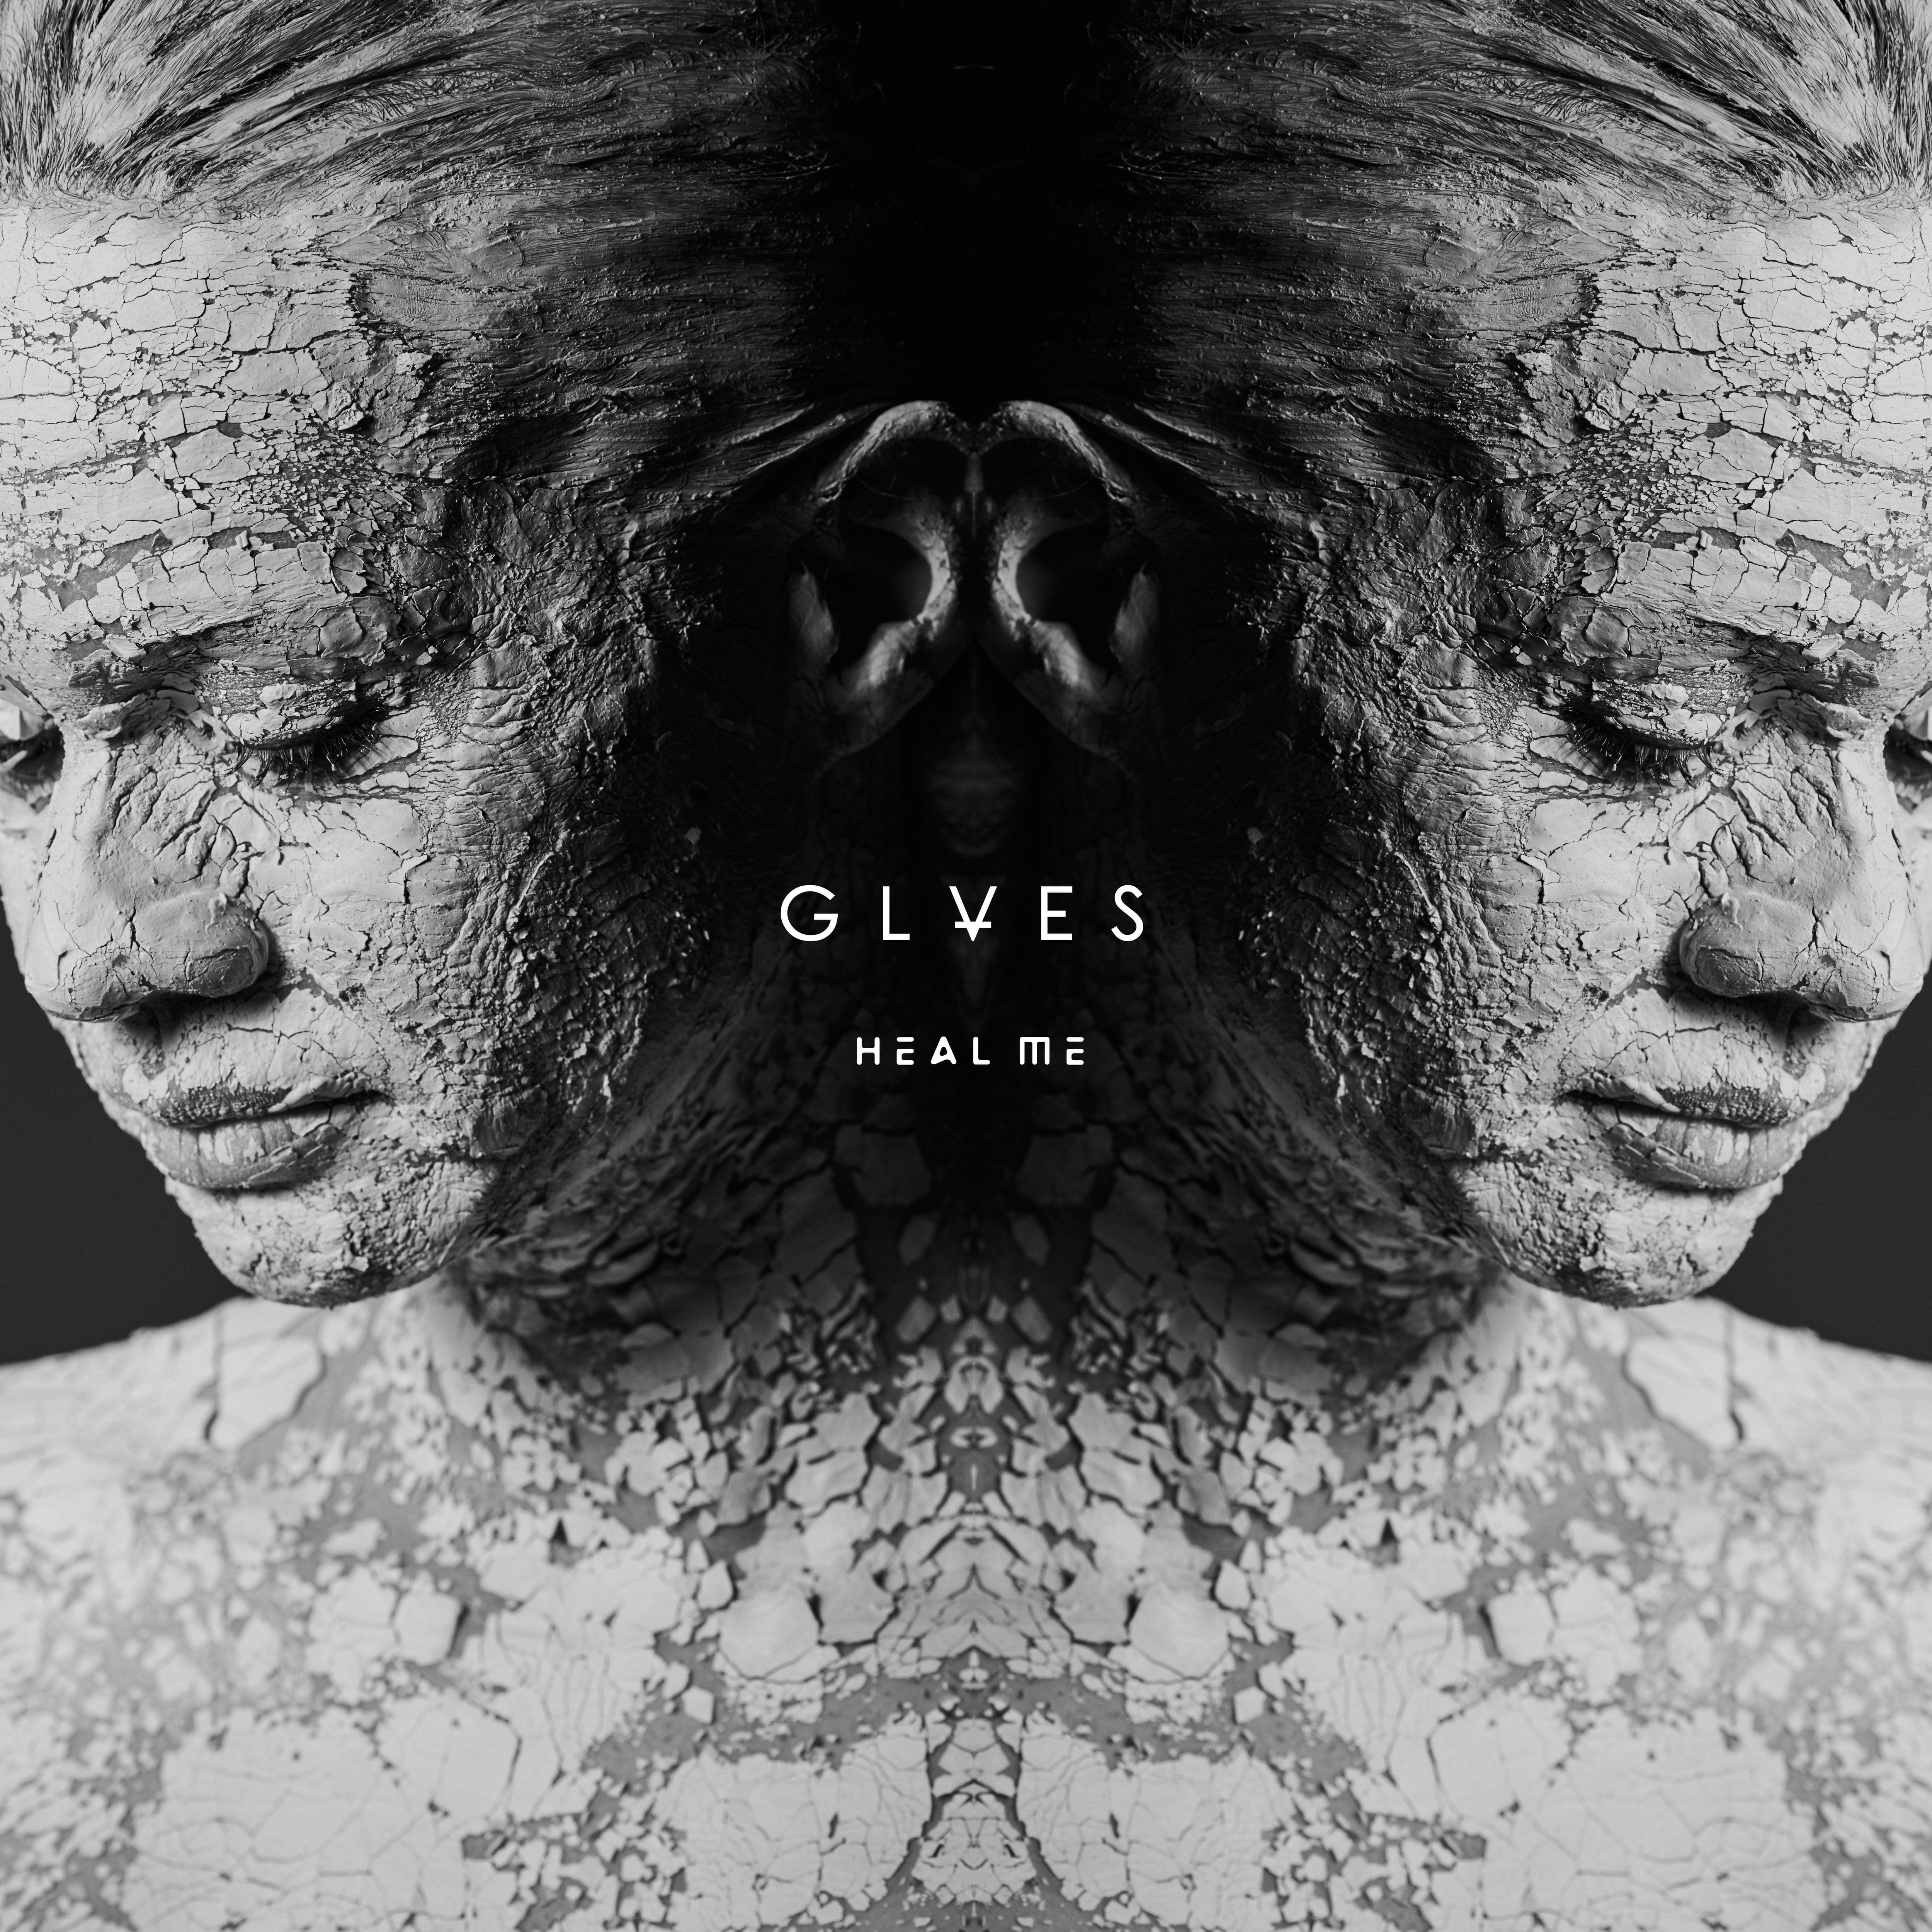 GLVES Creates Mesmerizing Dark Folktronica on “Heal Me”